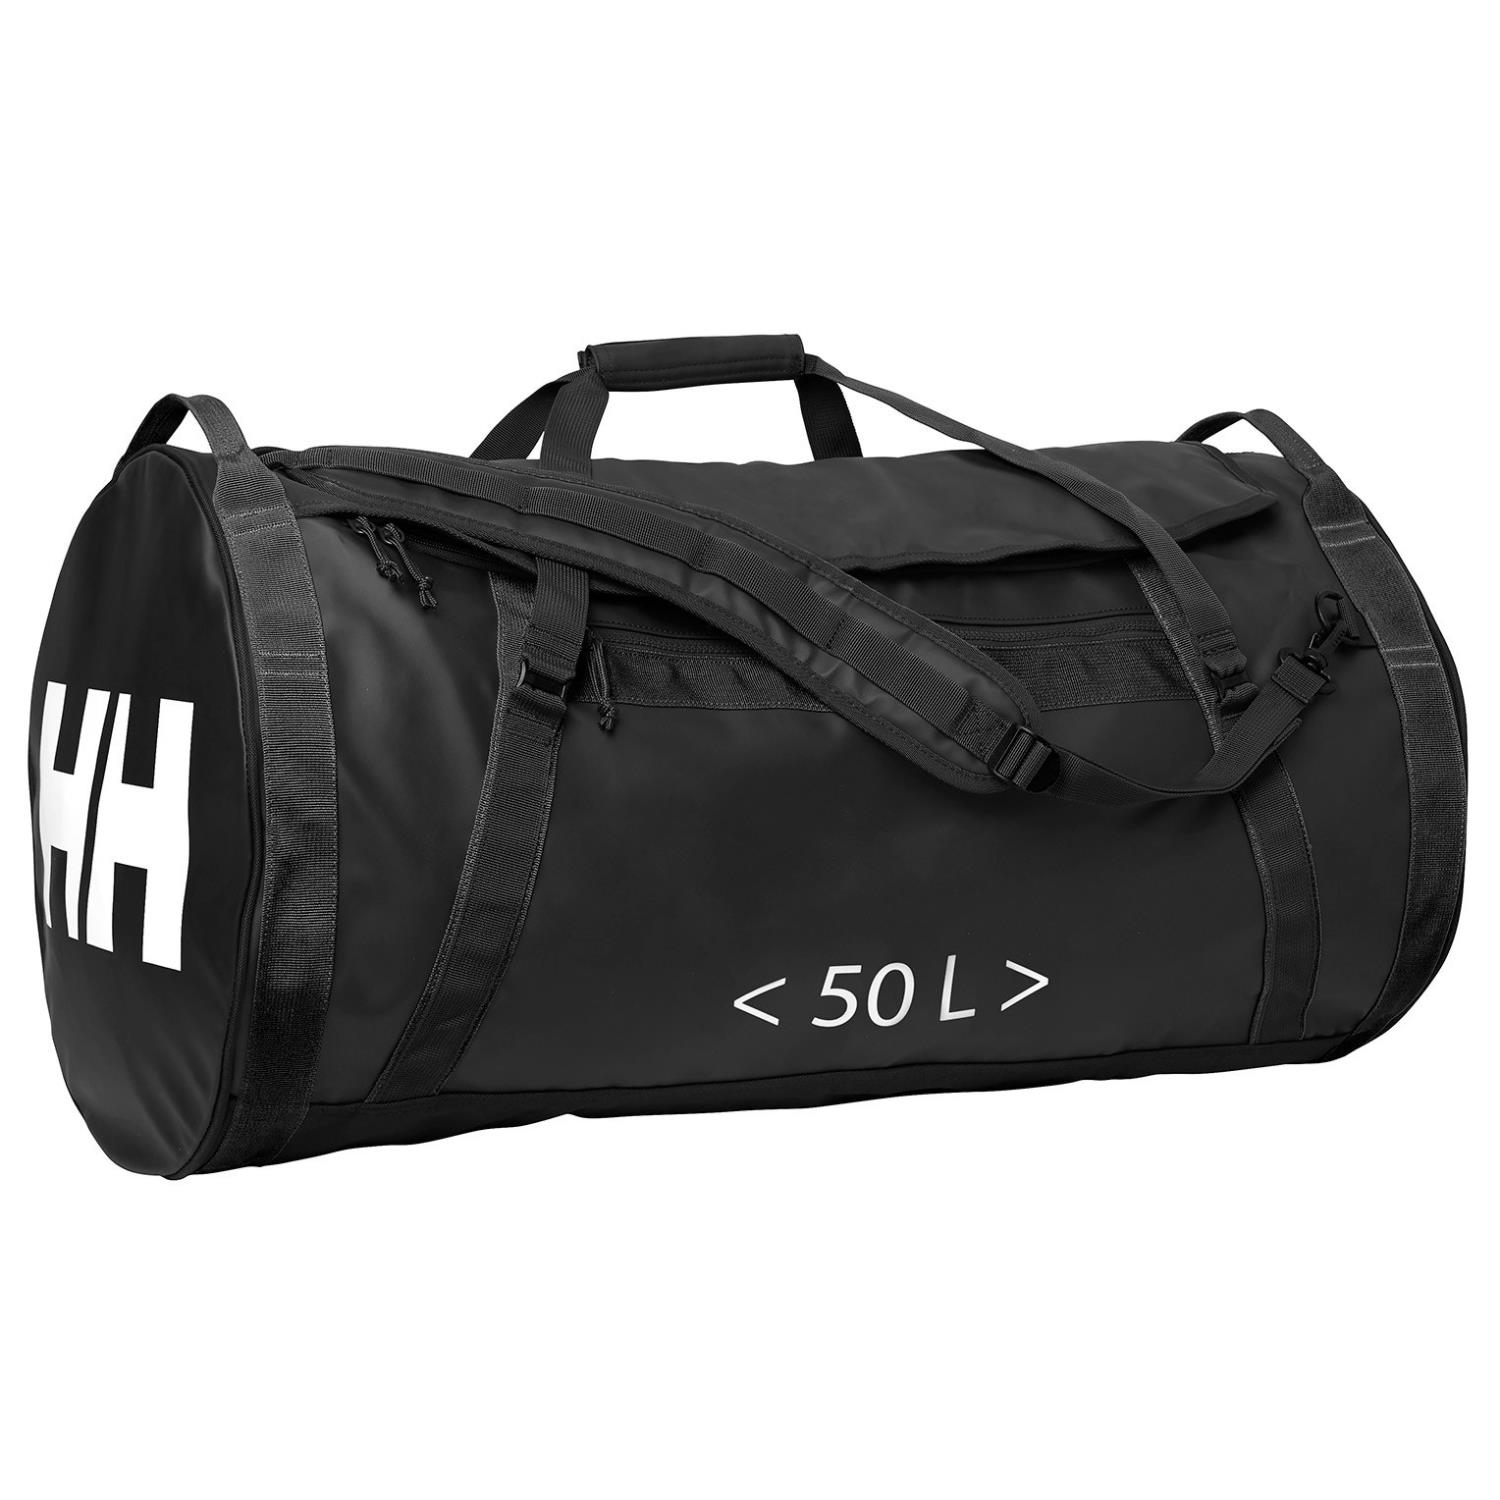 Helly Hansen  Hh Duffel Bag 2 50l